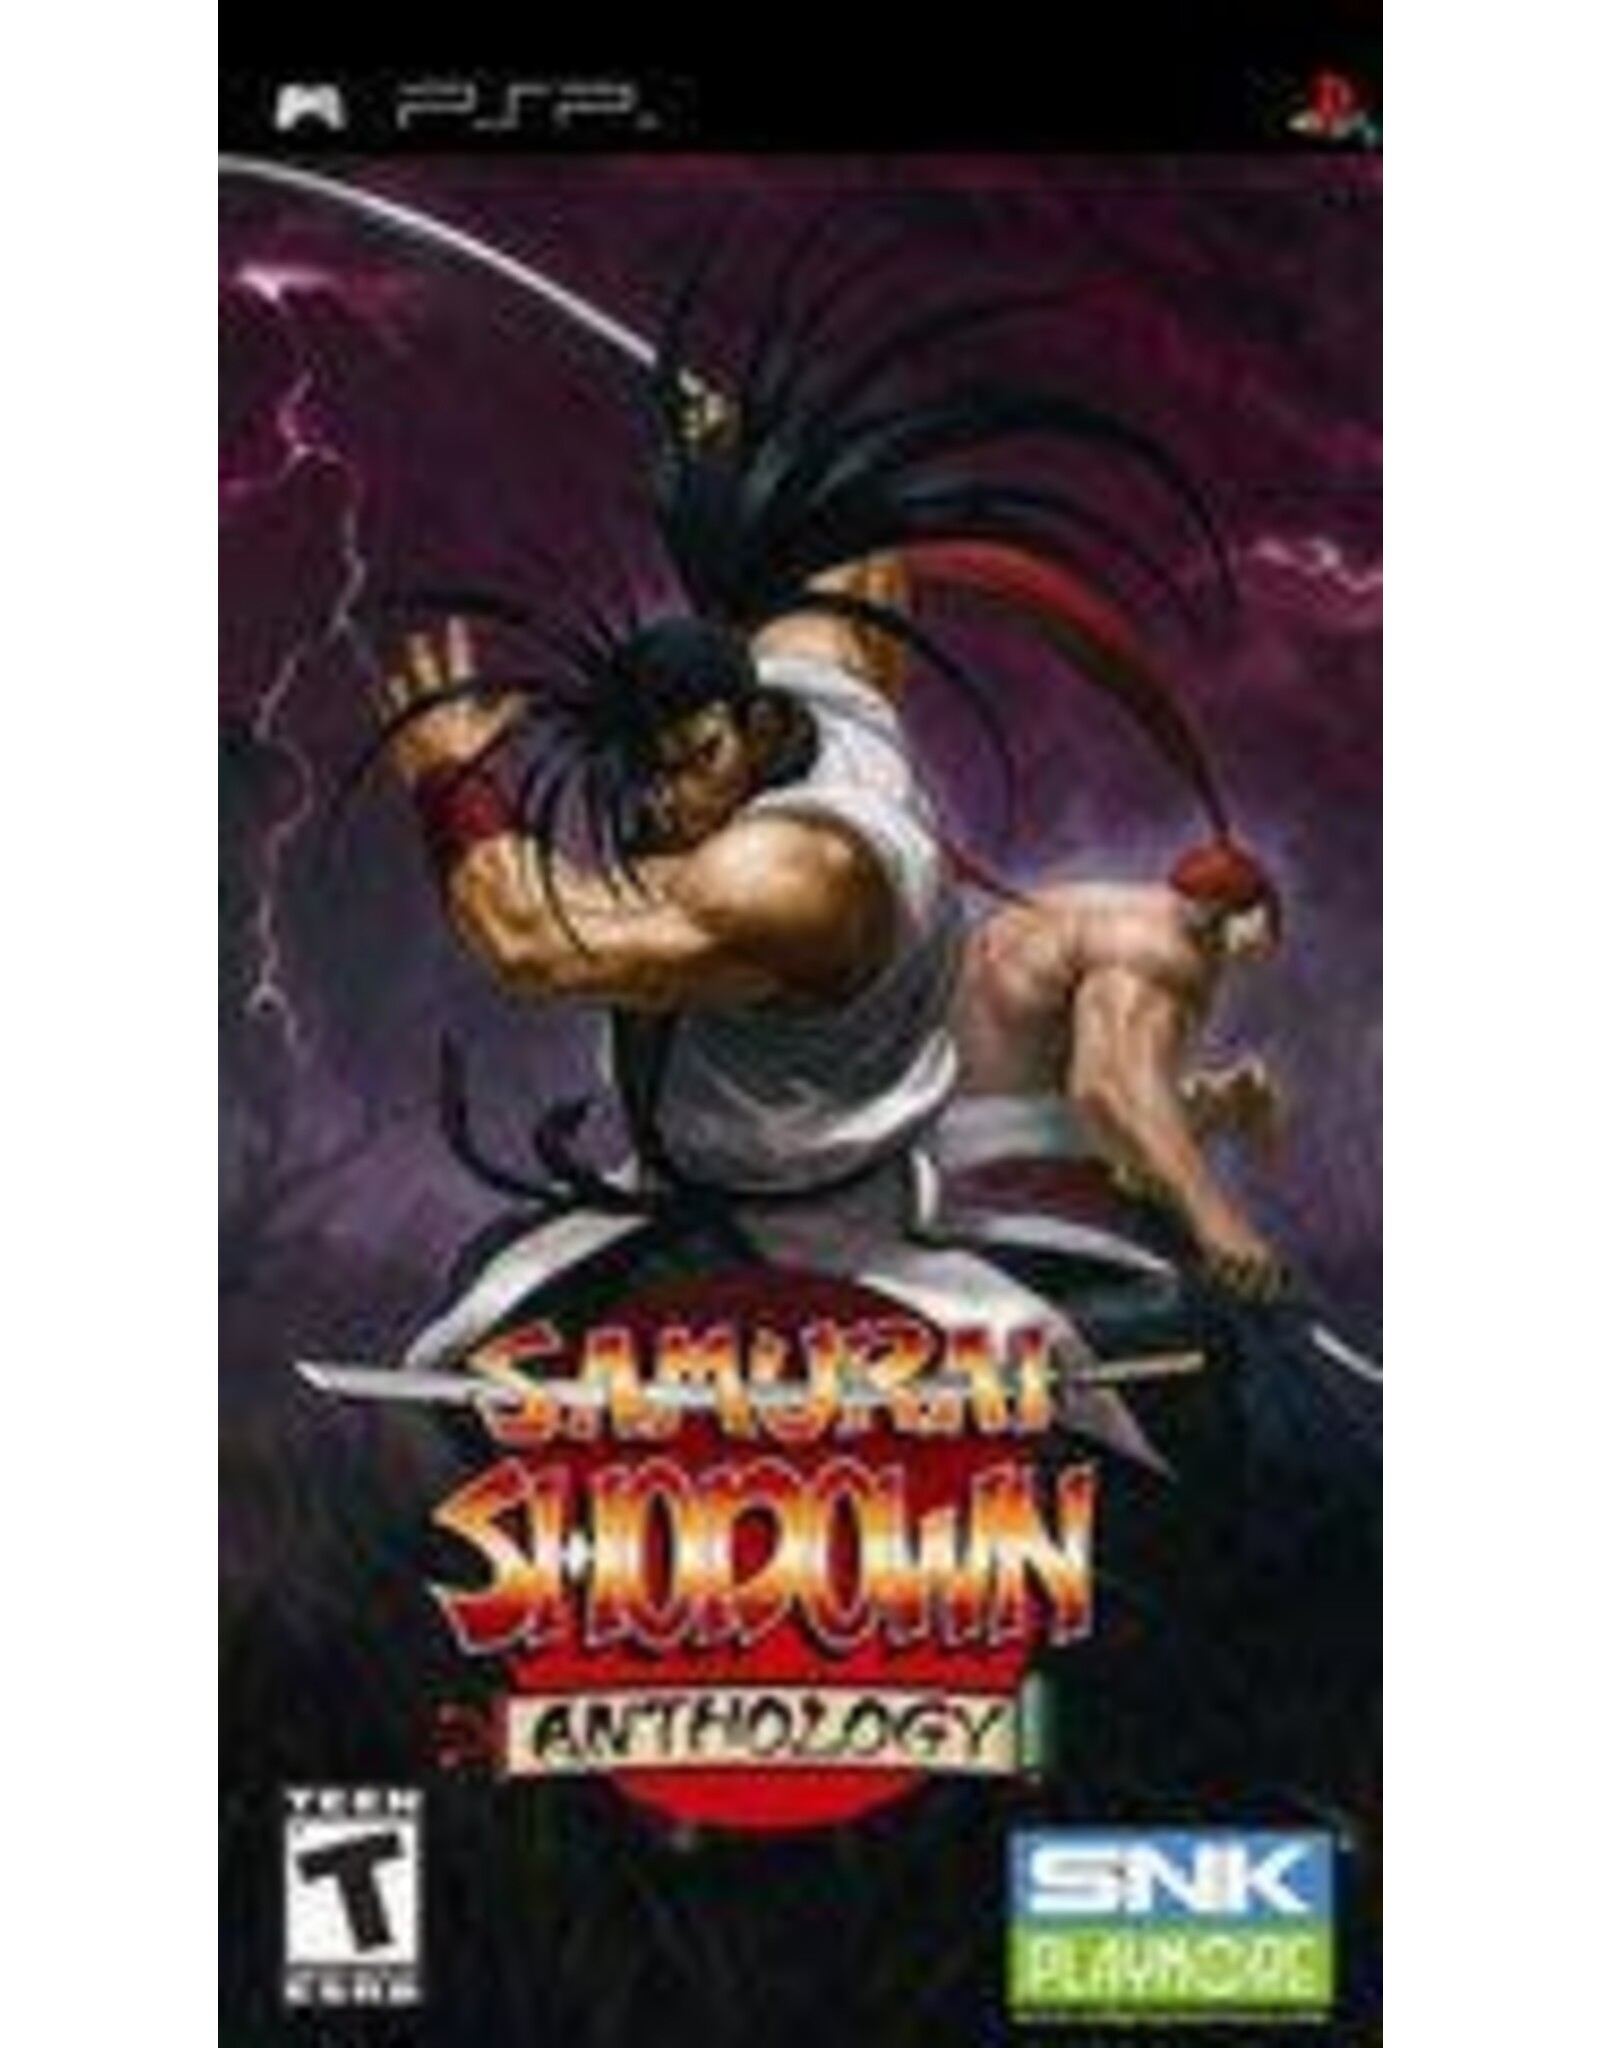 PSP Samurai Shodown Anthology (UMD Only)